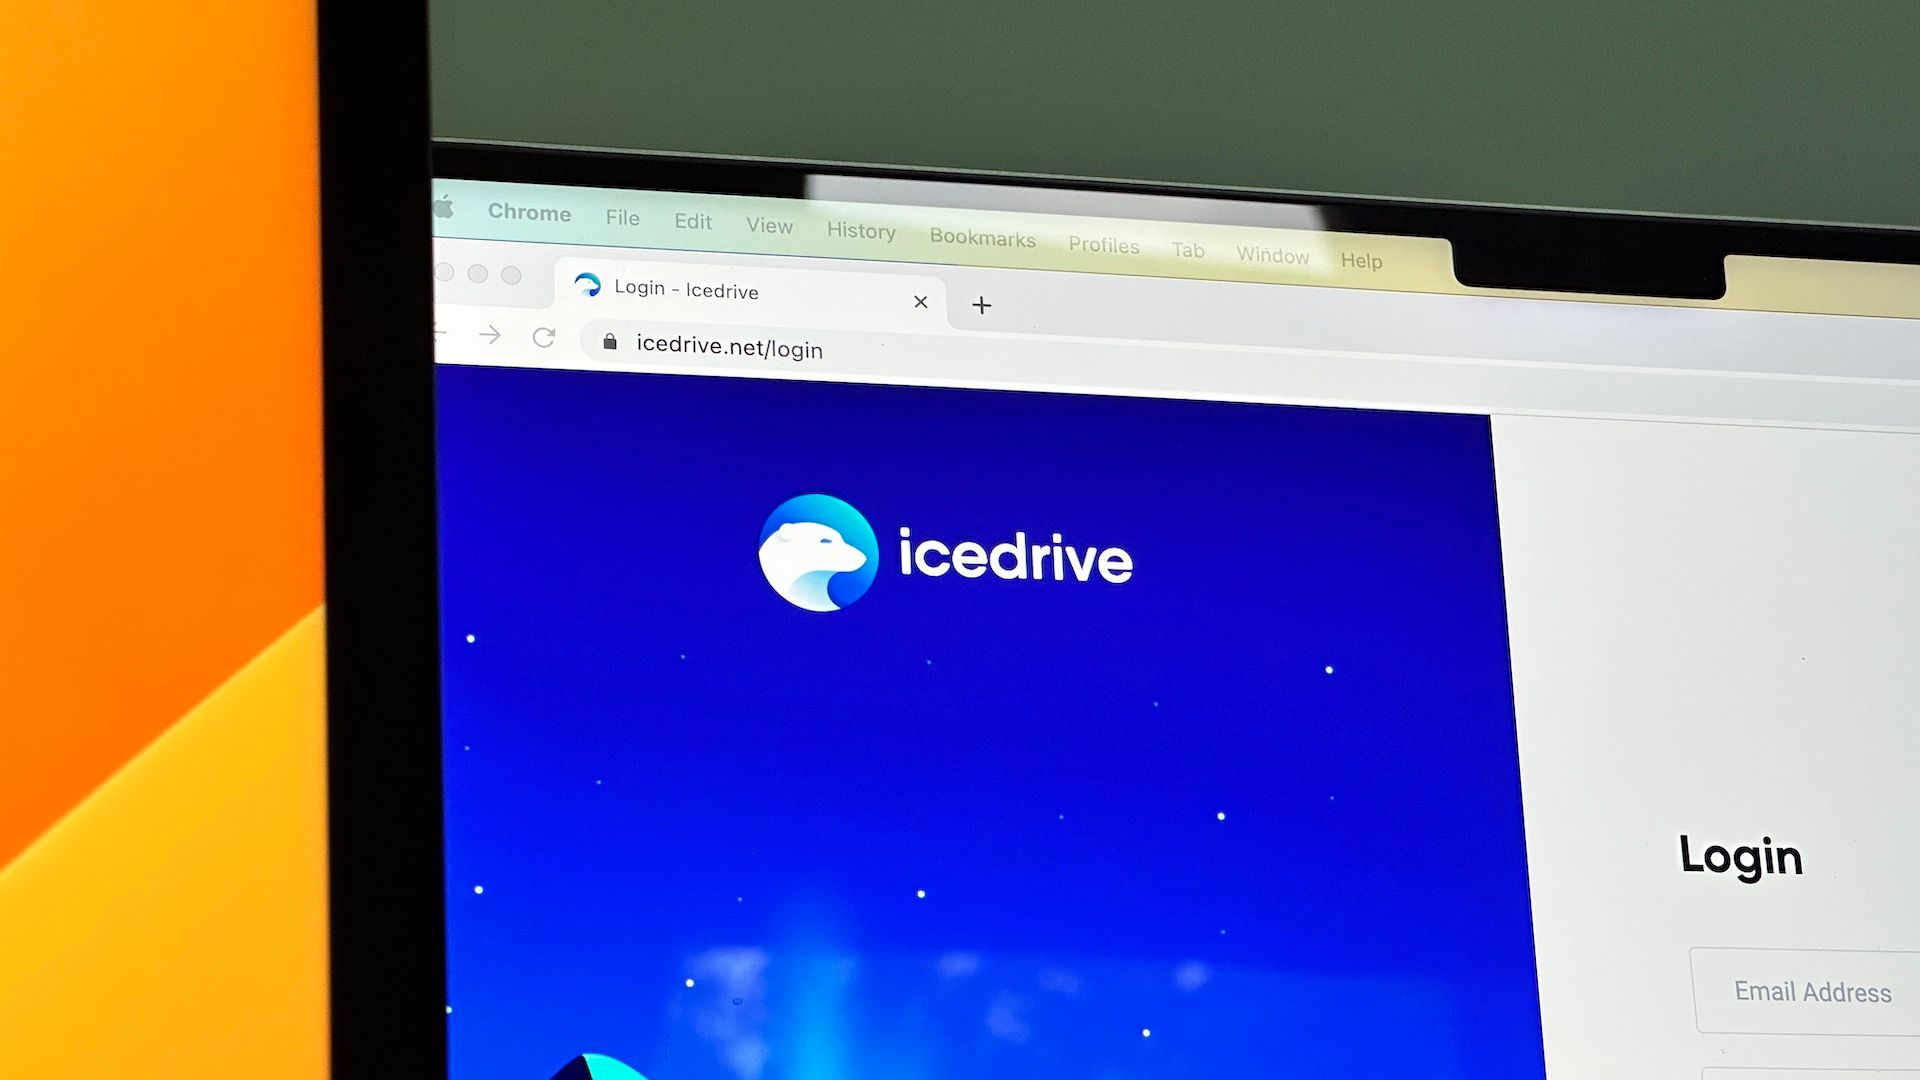 Icedrive web portal running on a Mac